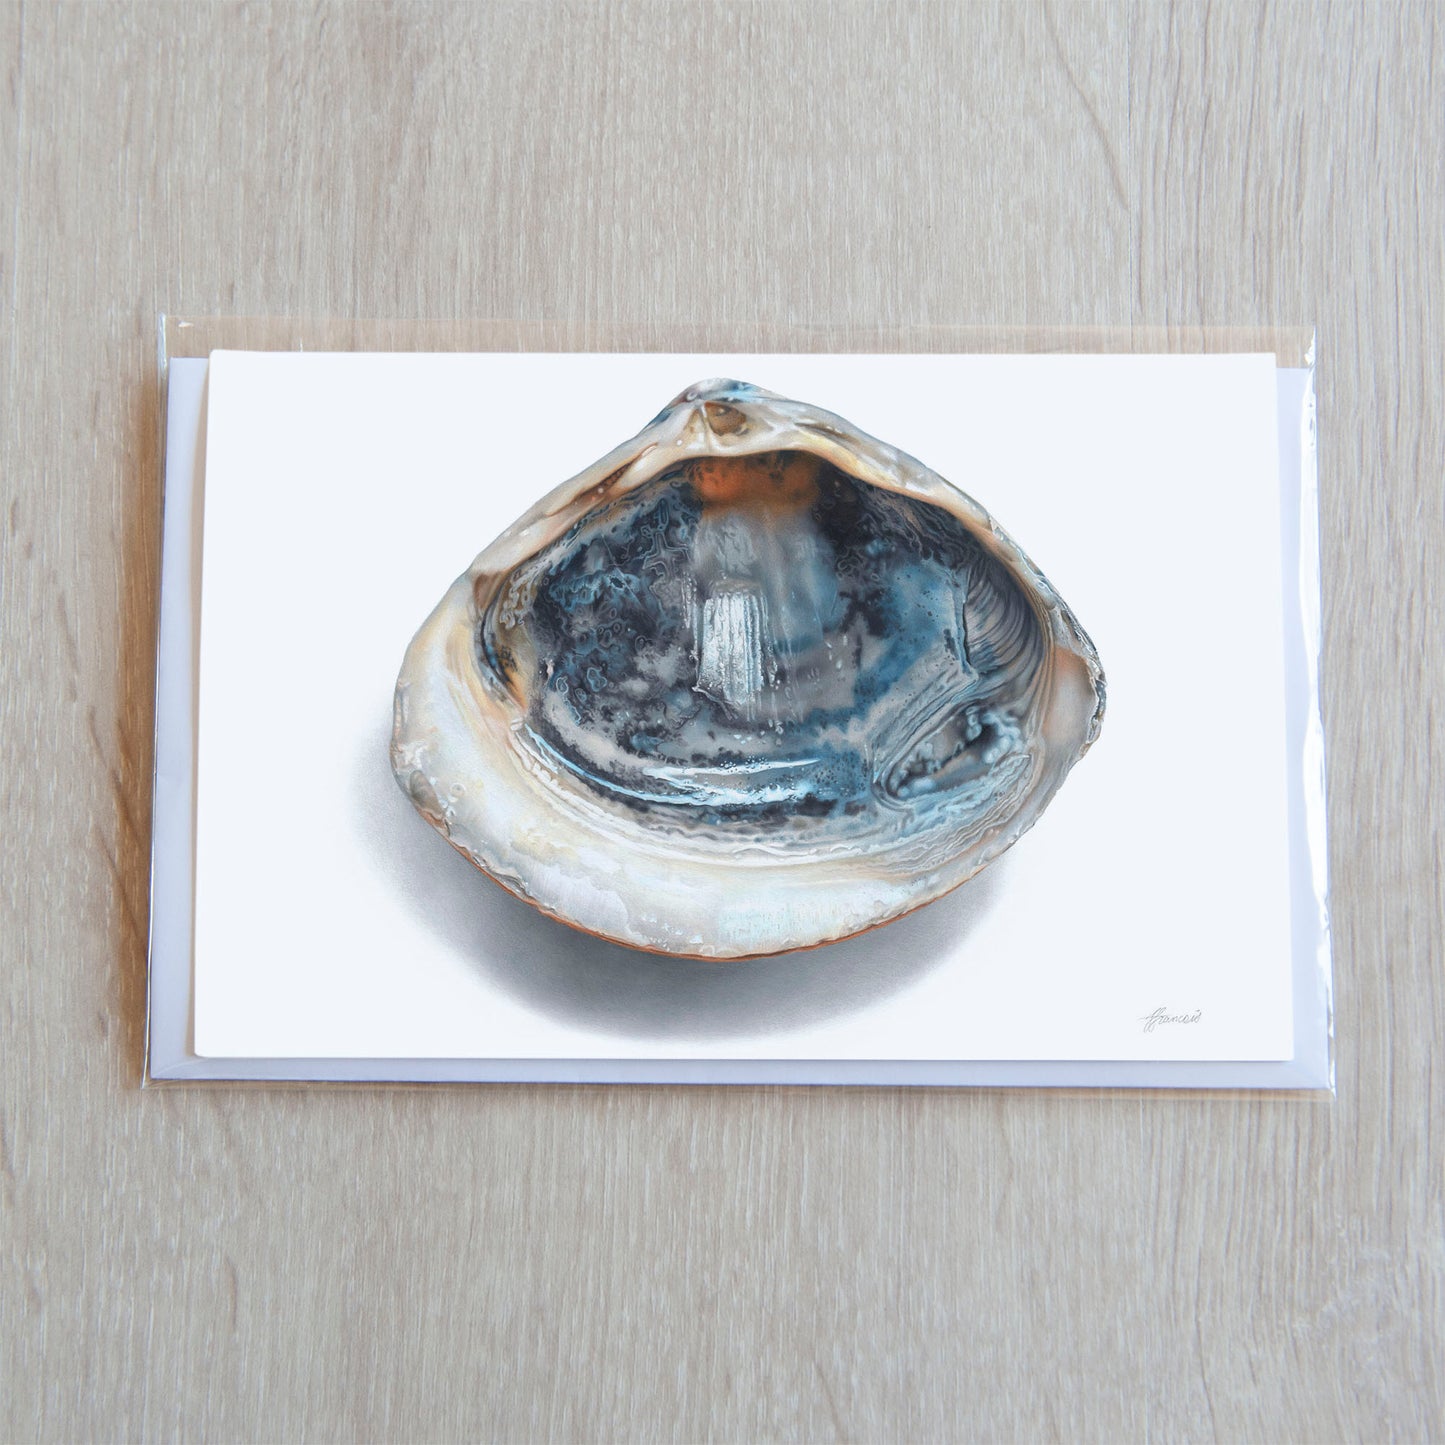 'Blue Shell' greeting card